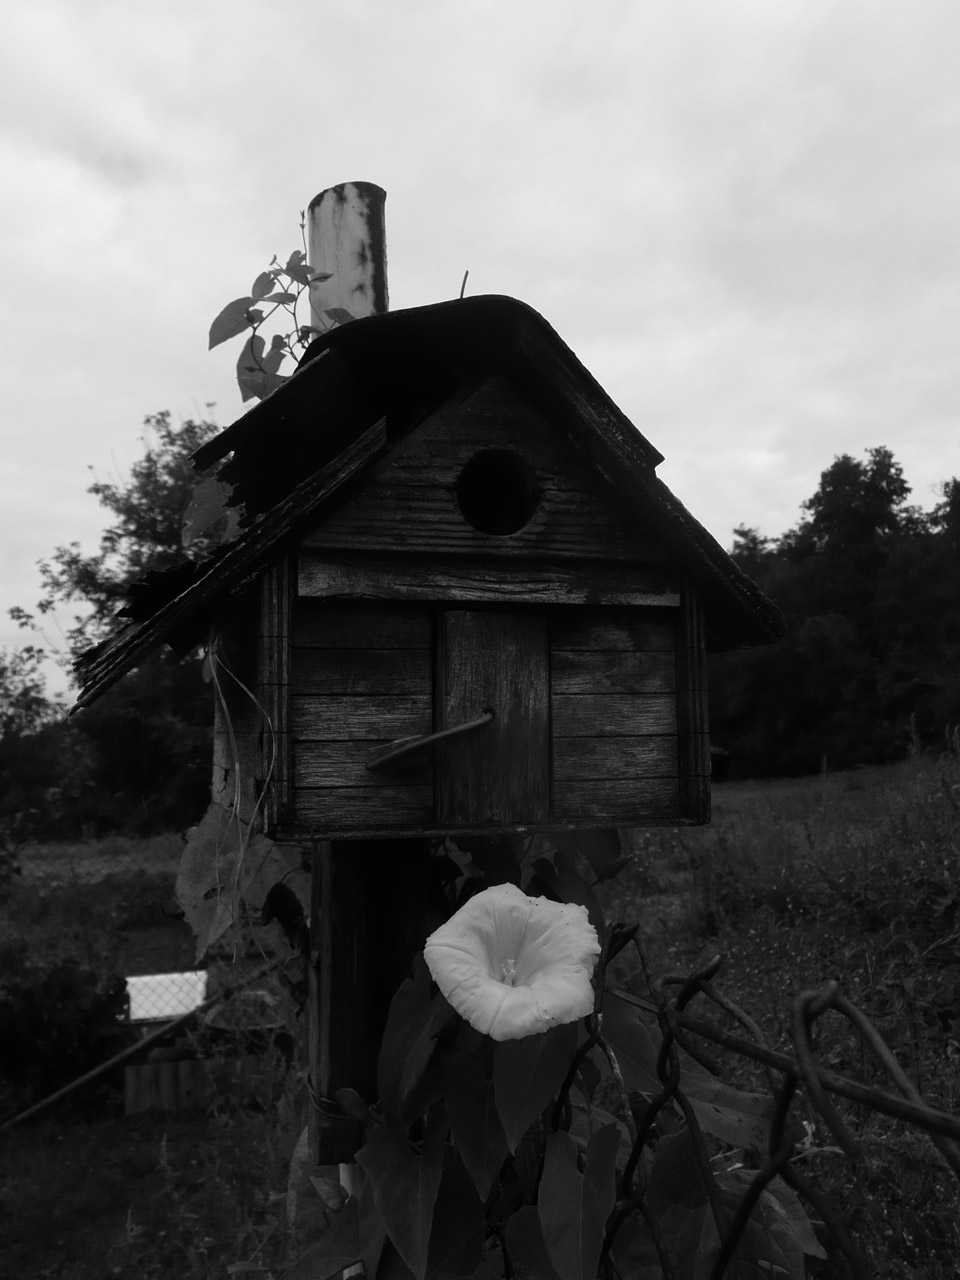 Small Birdhouse